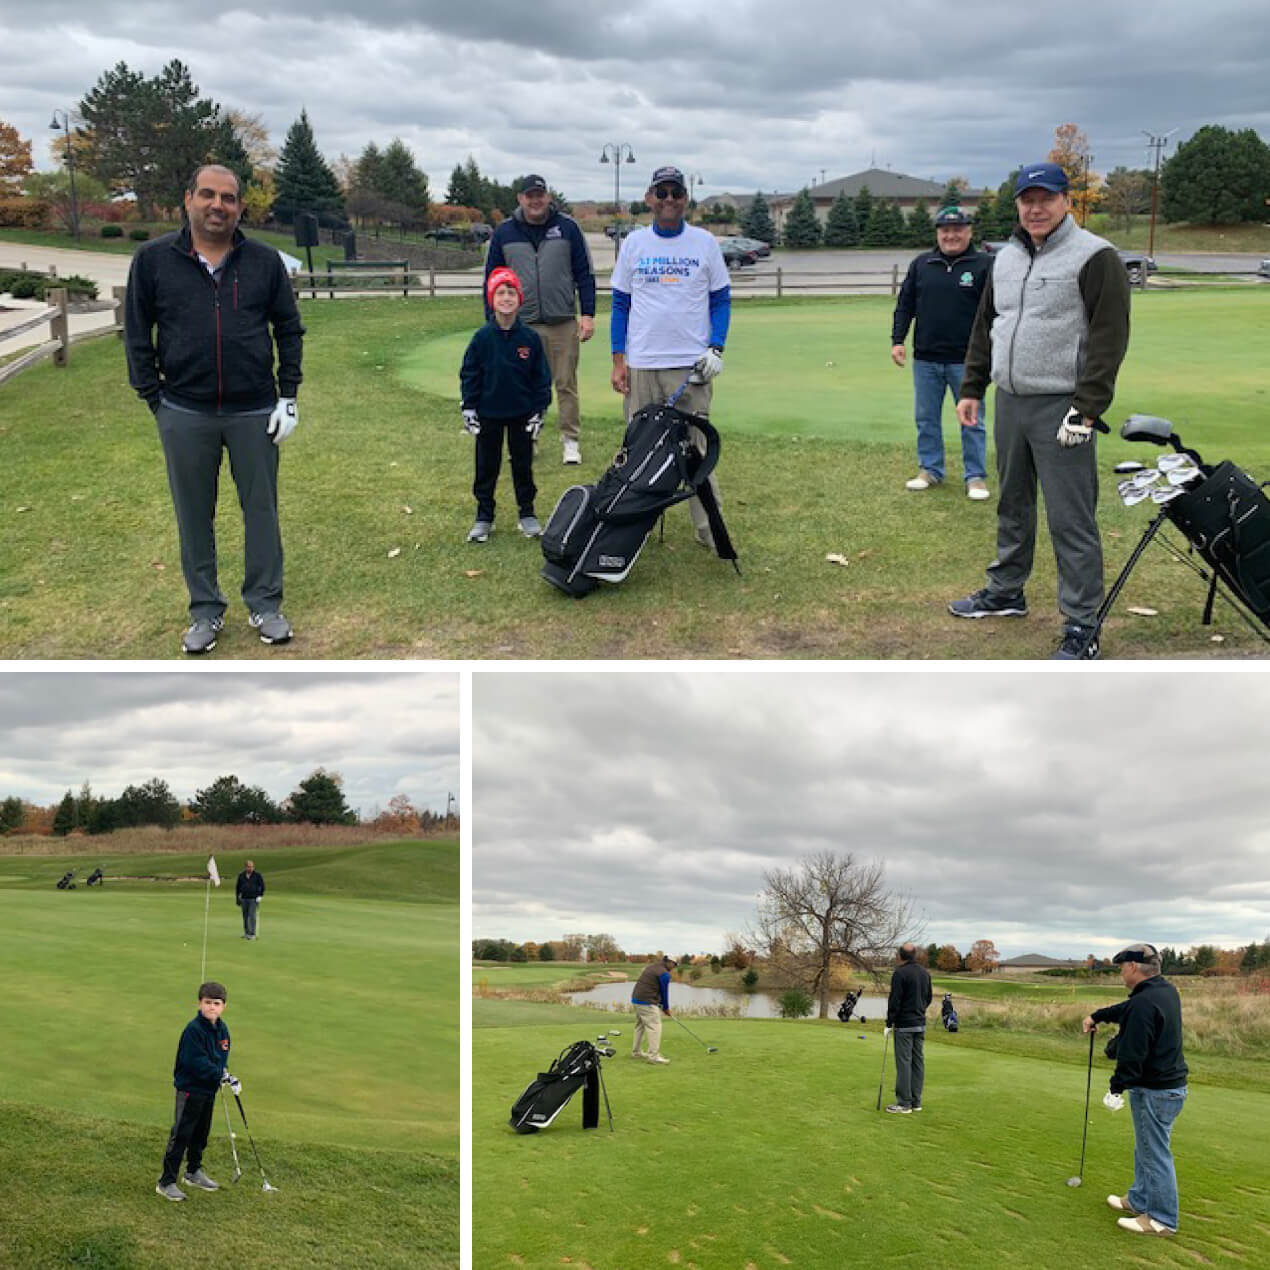 Team Rohan’s Crohn’s & Colitis Foundation golf outing fundraiser